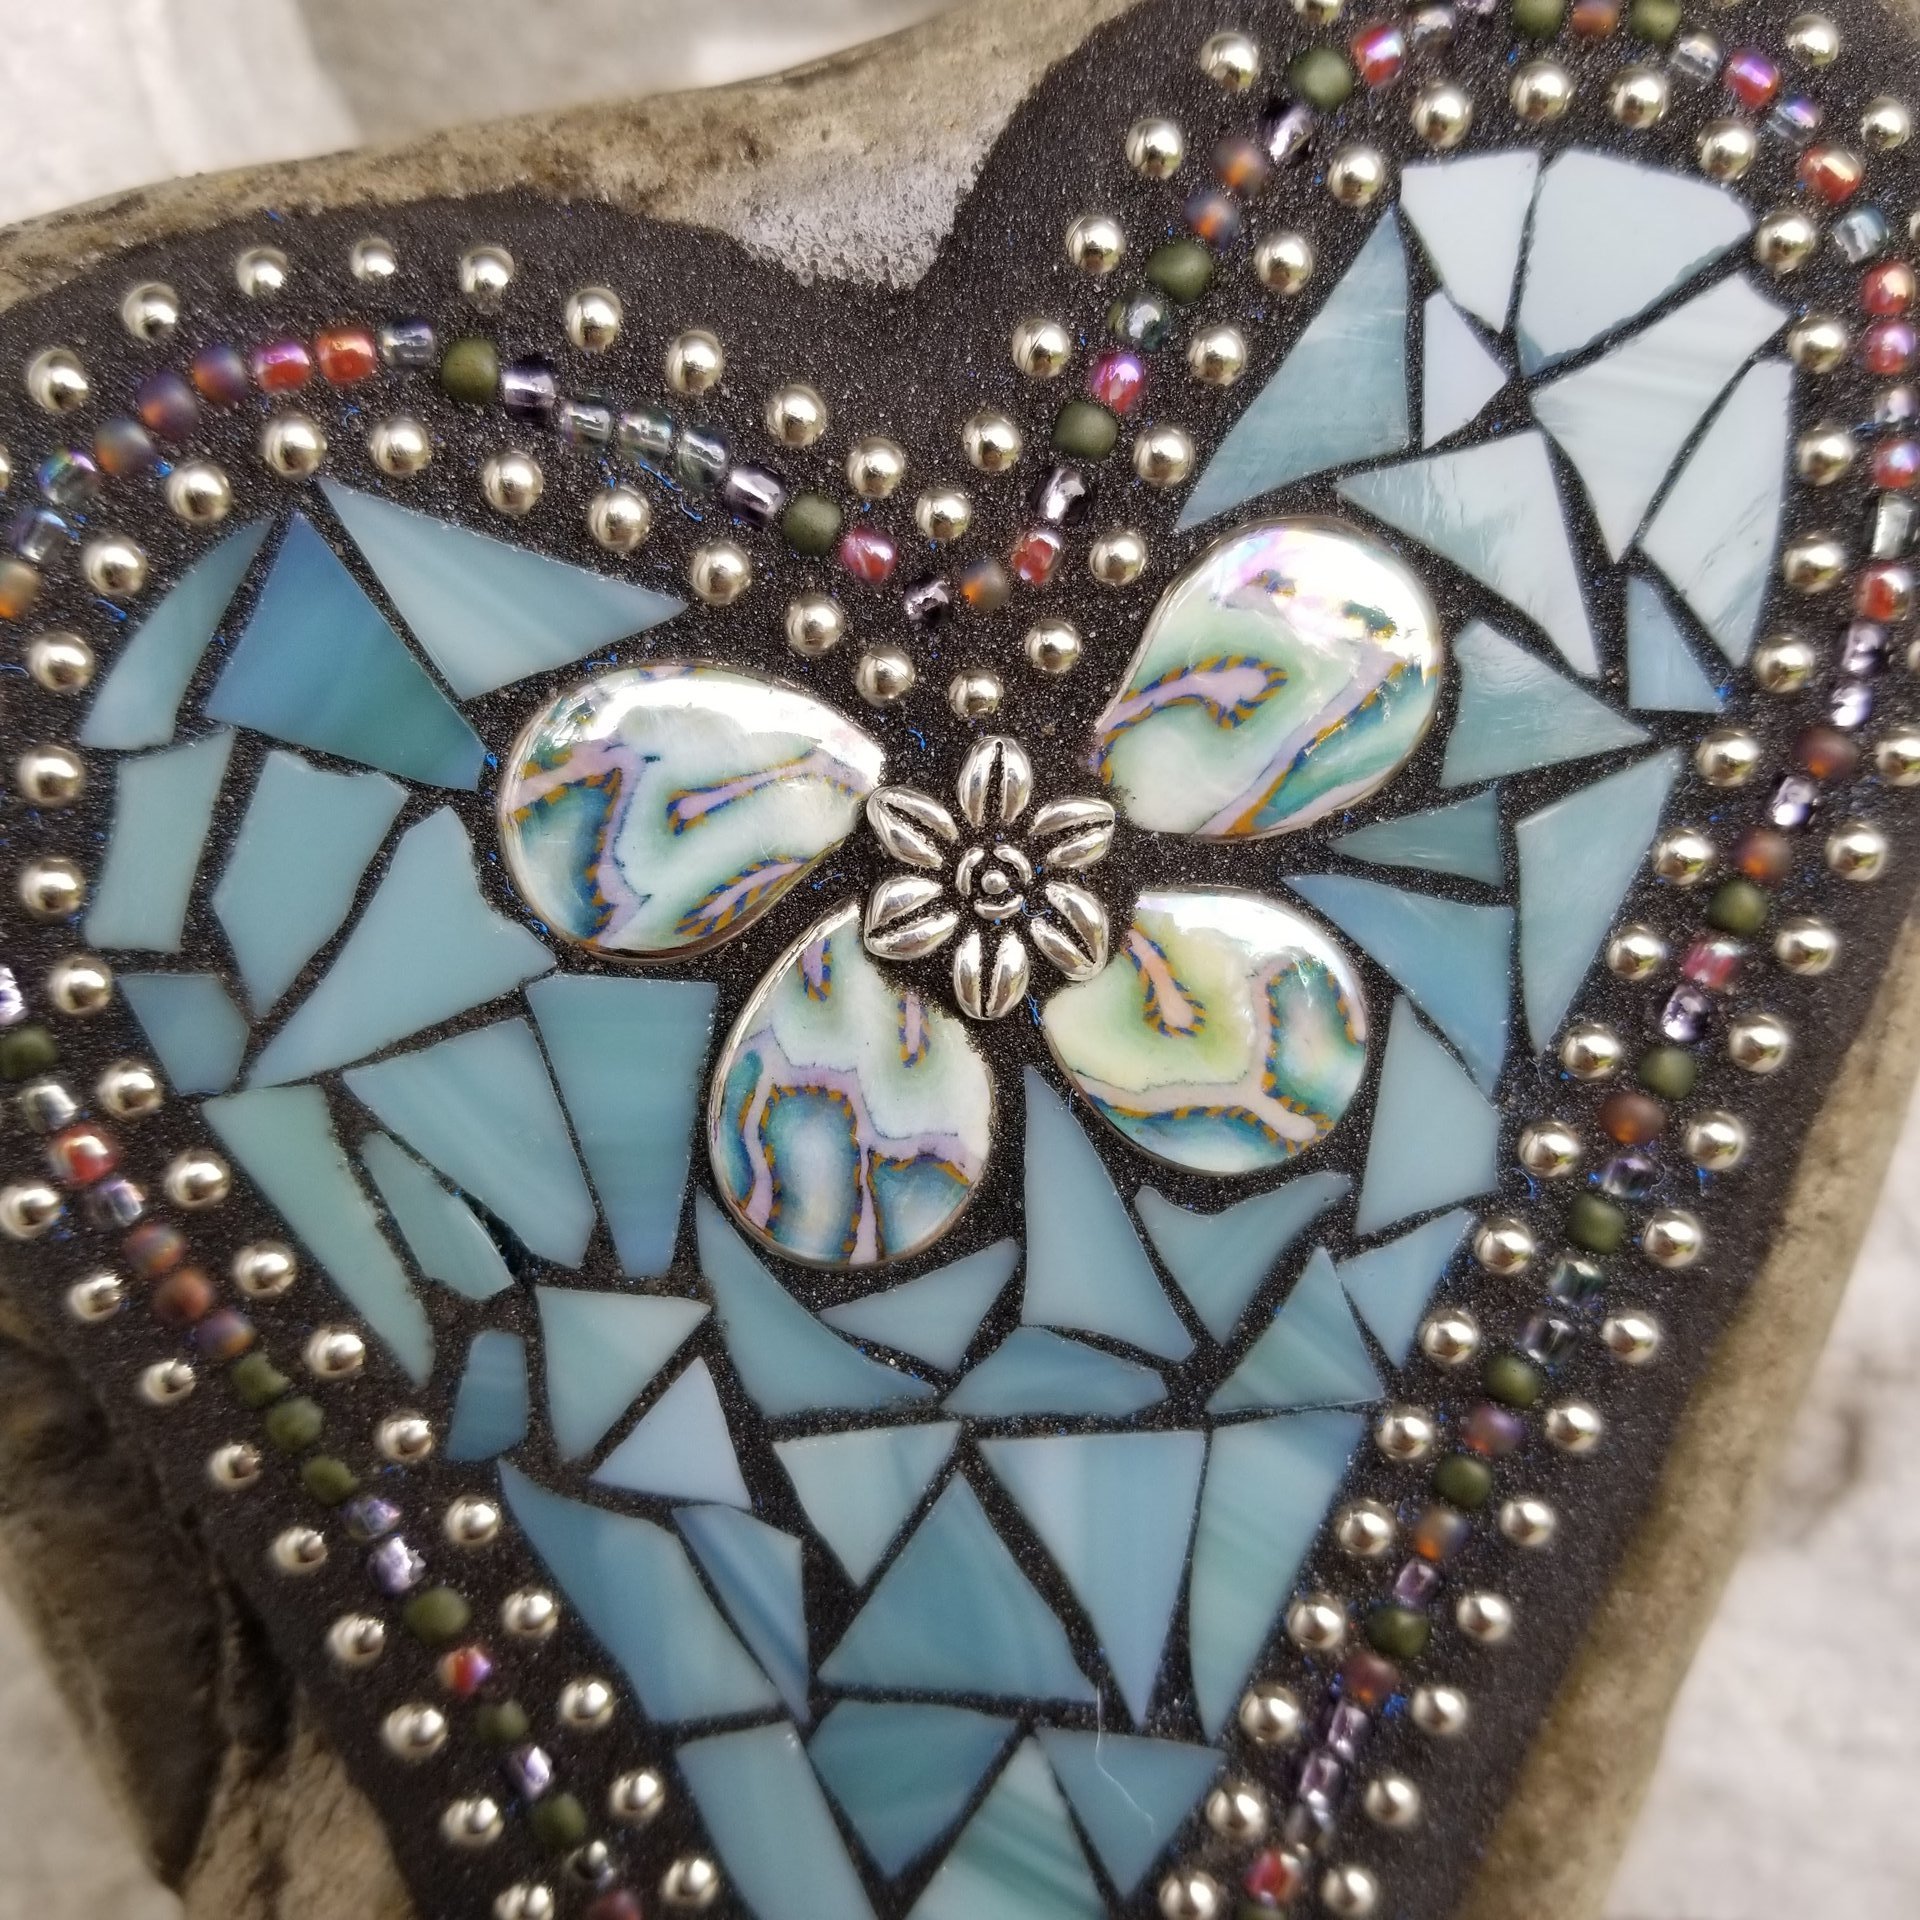 Dusty Teal Blue Mosaic Heart Garden Stone 